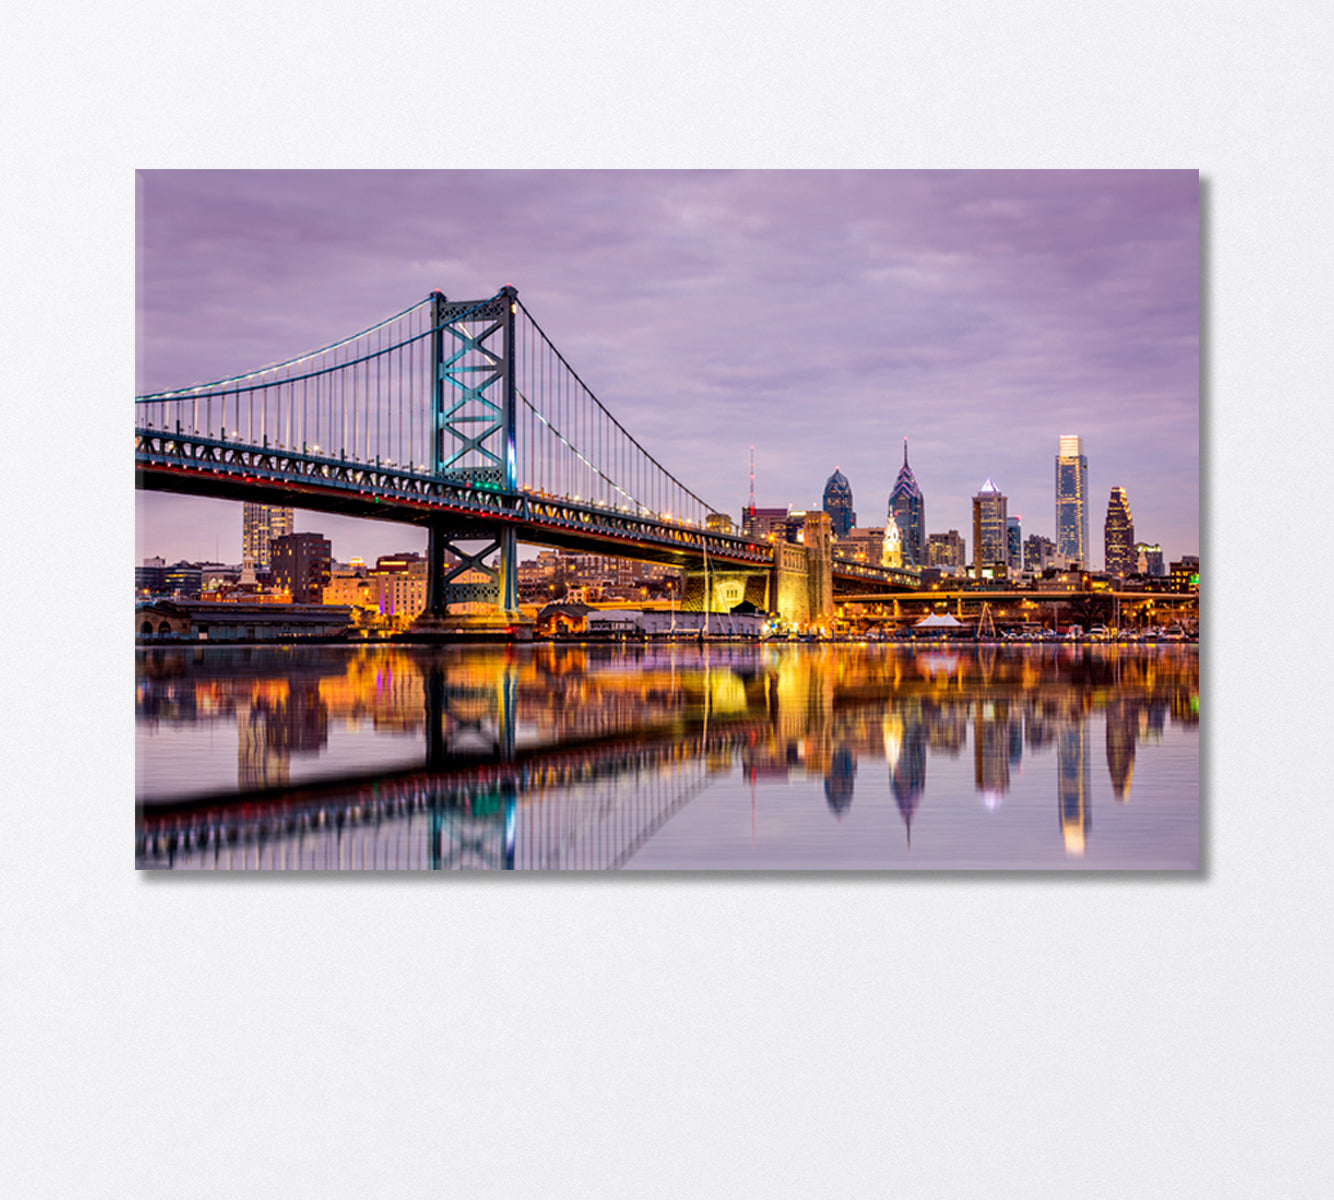 Ben Franklin Bridge and Philadelphia Skyline Canvas Print-Canvas Print-CetArt-1 Panel-24x16 inches-CetArt